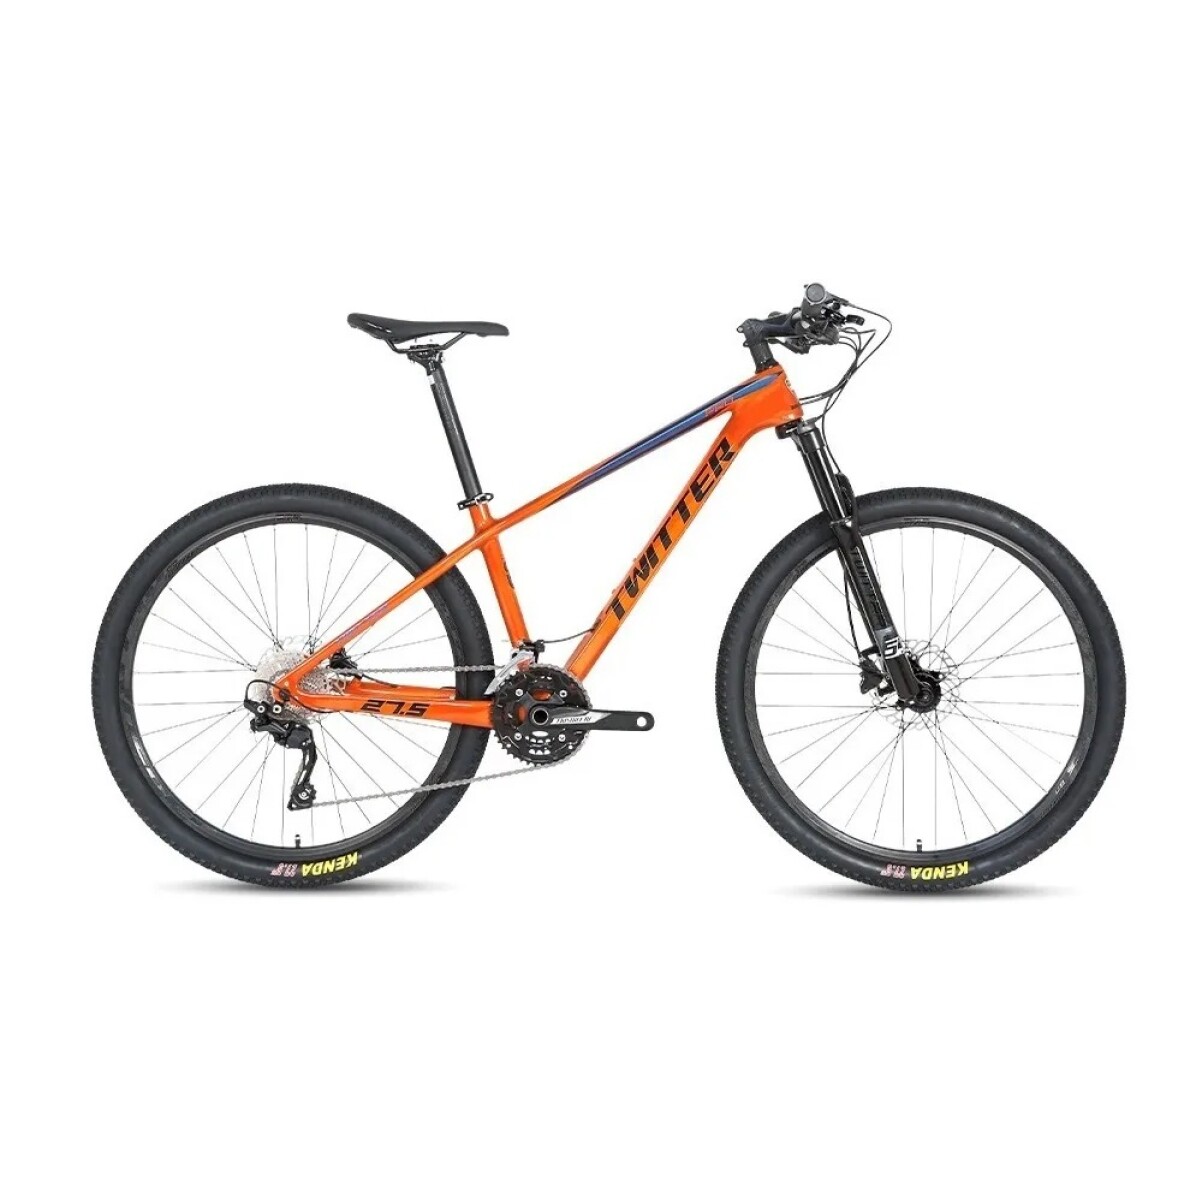 Bicicleta Montaña TWITTER Leopard Rodado 29 12S*2/T19 Carbono Orange 